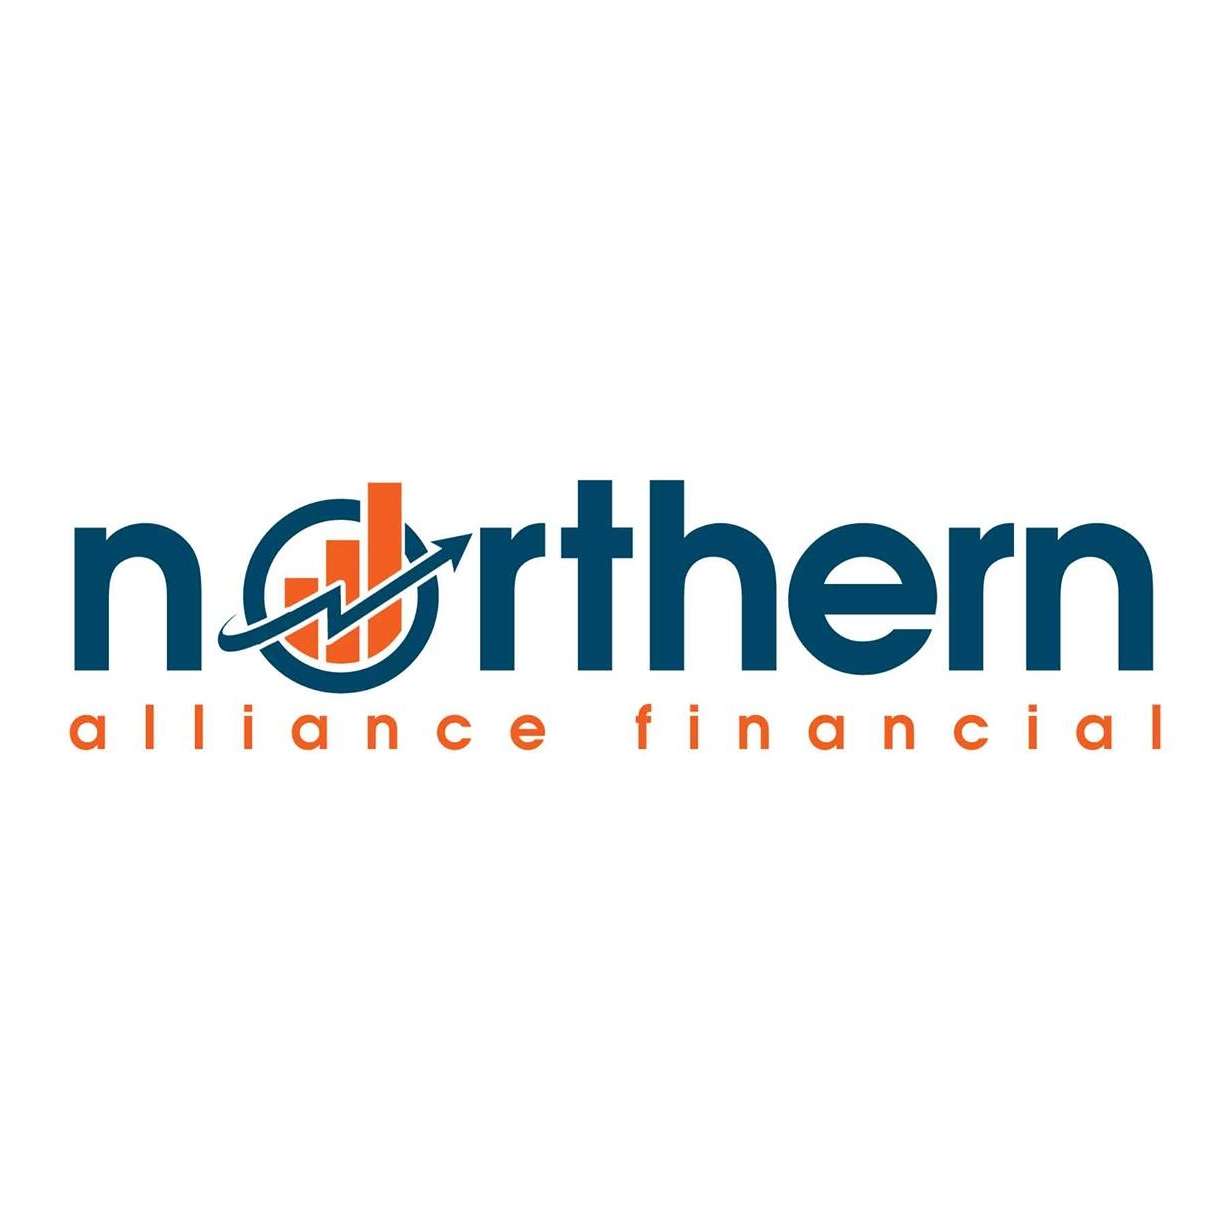 Northern Alliance Financial Logo